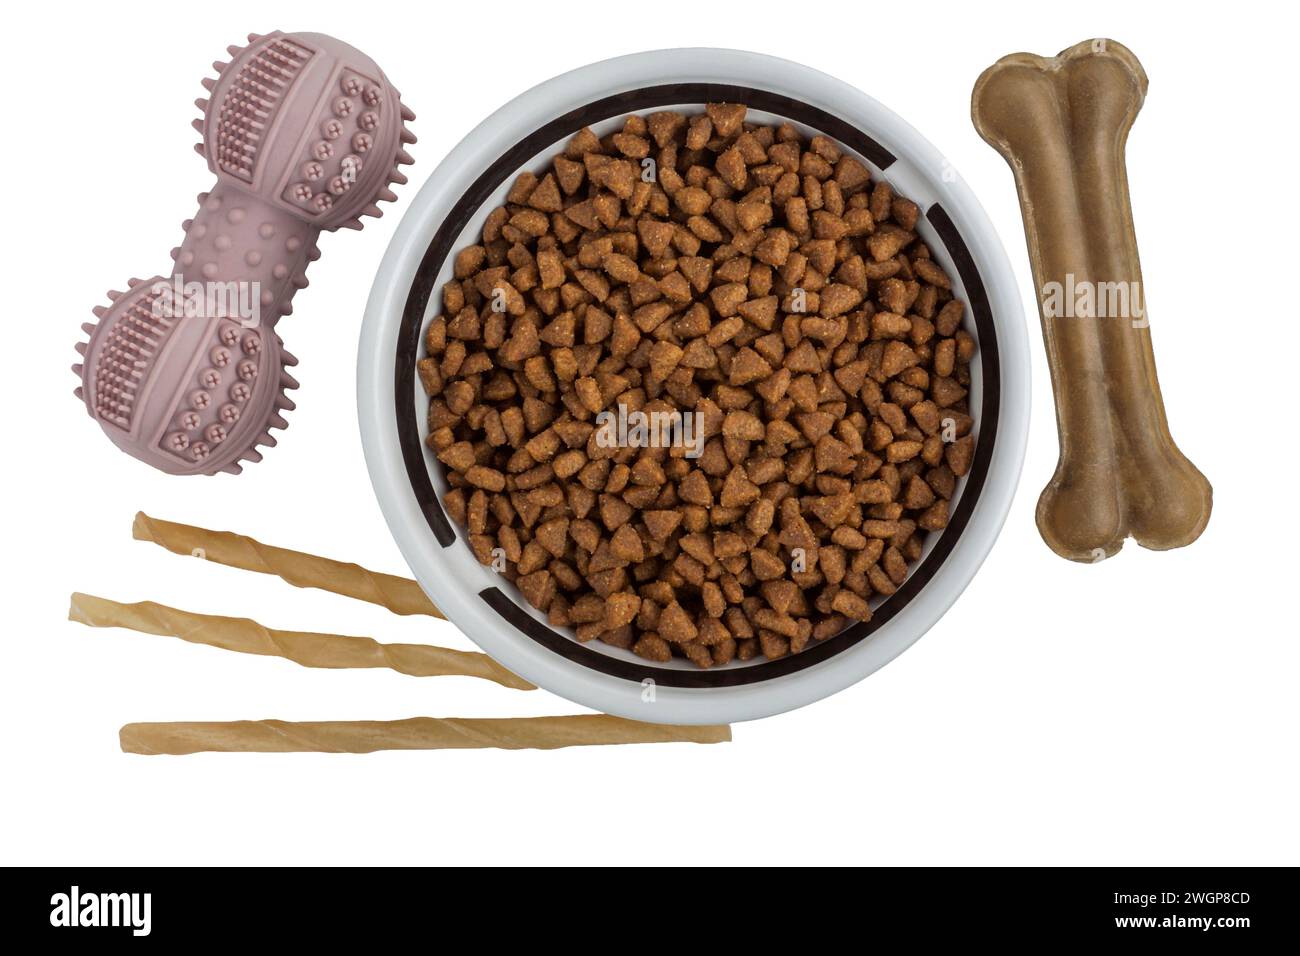 Dog food and toys isolated on white background Stock Photo